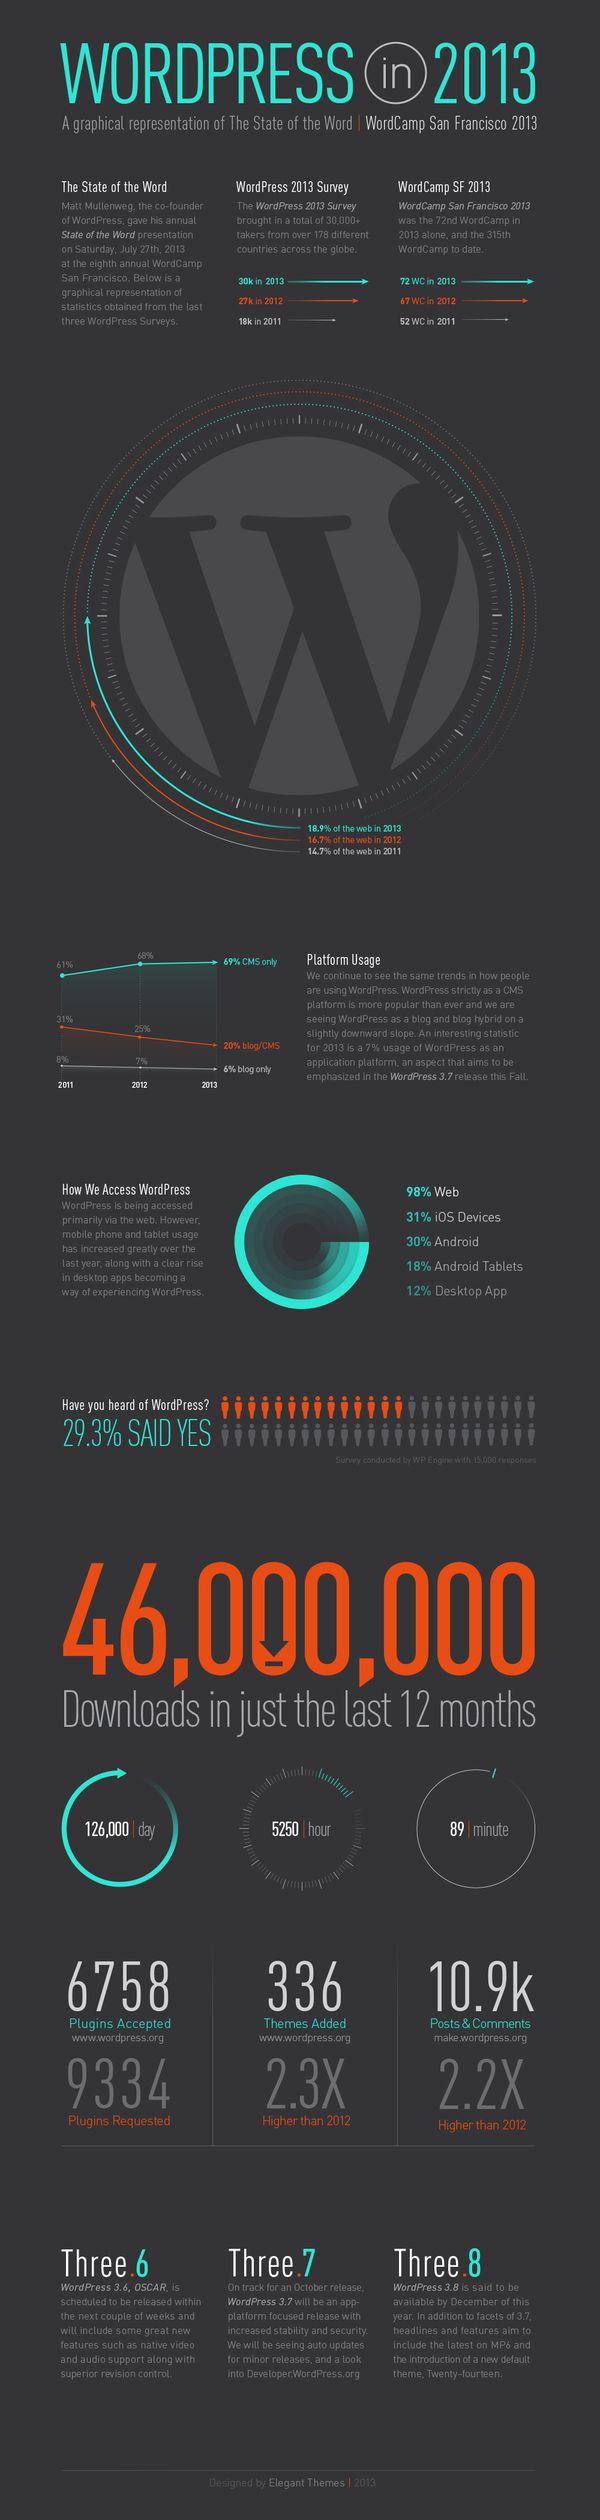 wordpress-infographic-2013